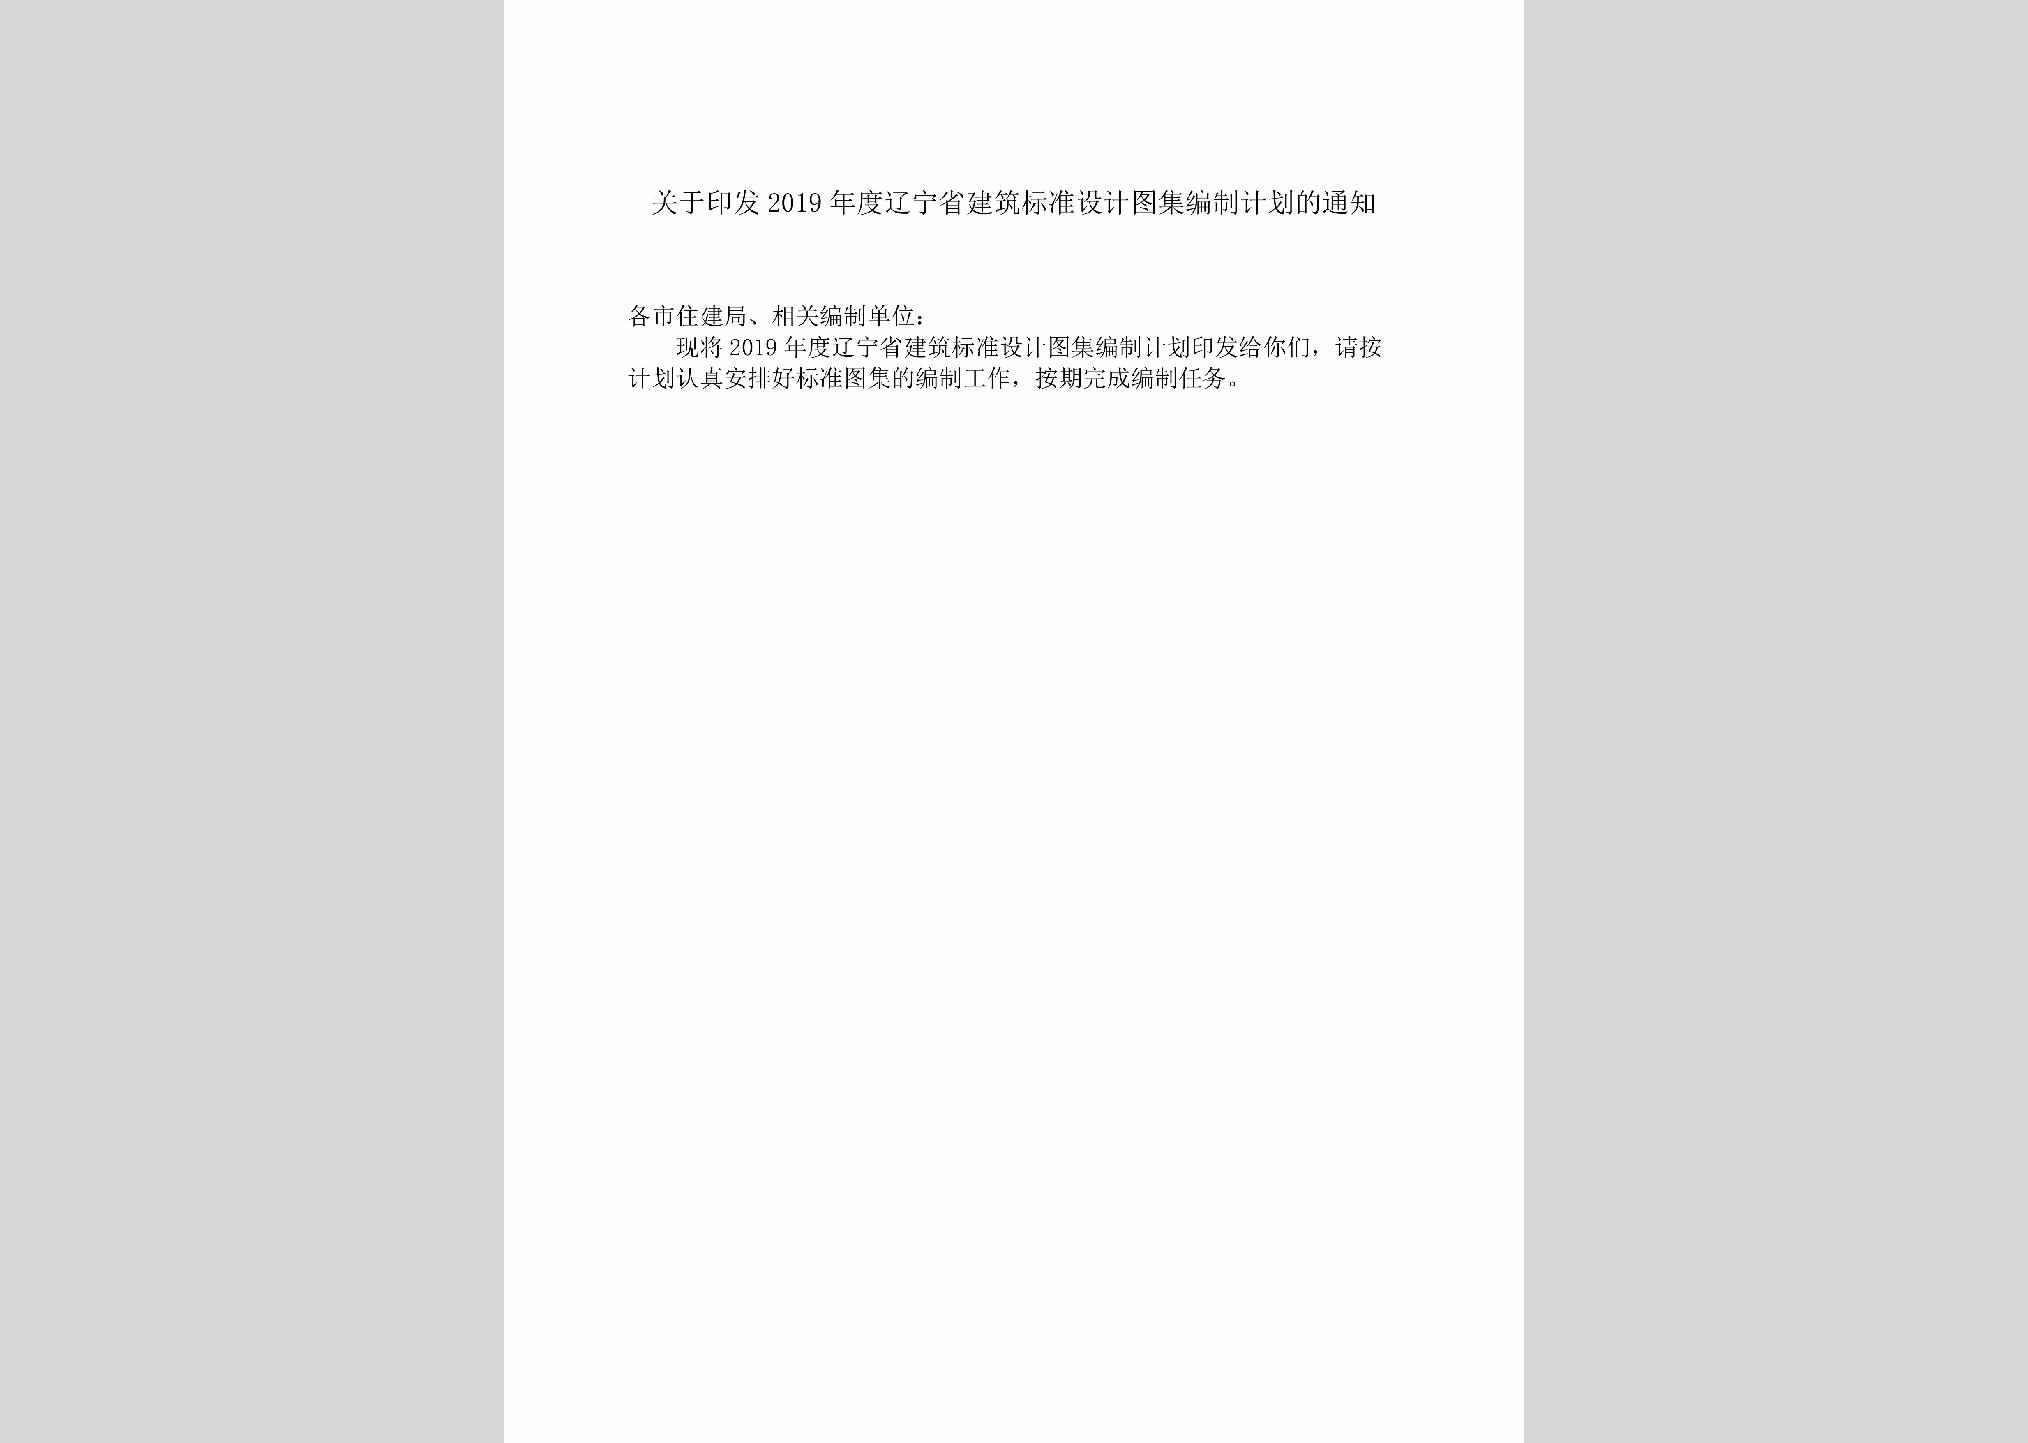 LN-JZBZSJTJ-2019：关于印发2019年度辽宁省建筑标准设计图集编制计划的通知